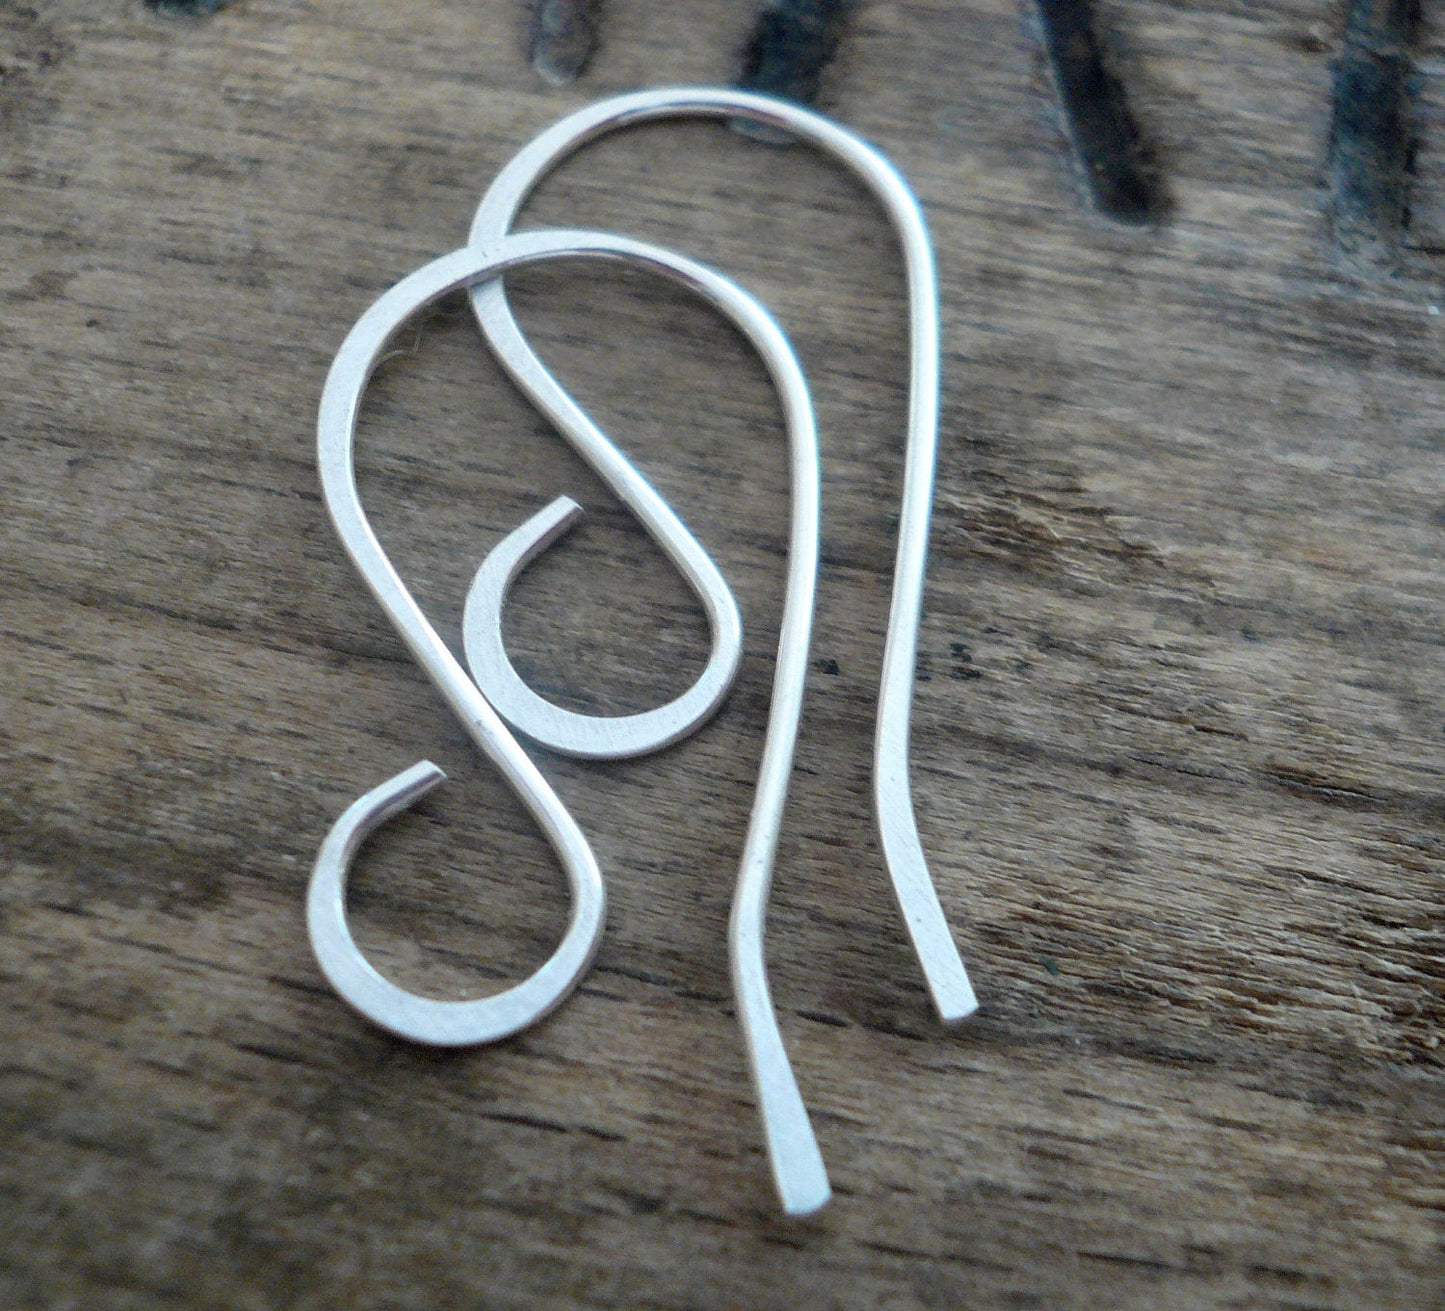 Large Loop Solitaire Sterling Silver- Handmade. Handforged